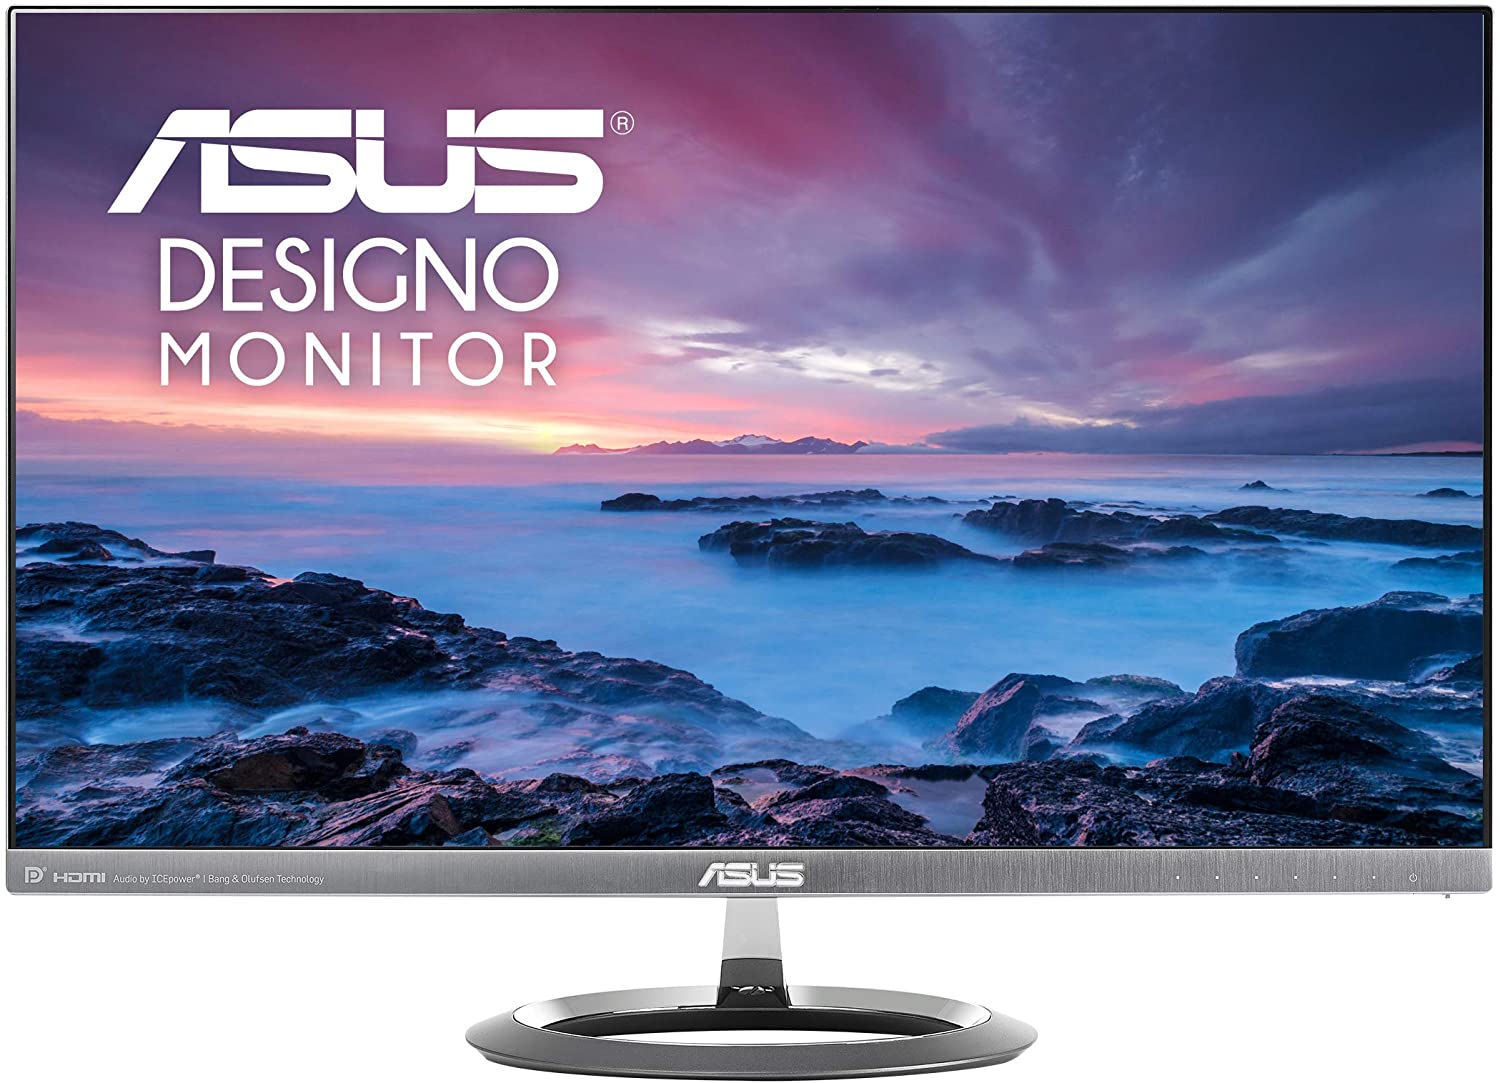 ASUS Designo MX25AQ 25” WQHD (2560 x 1440), IPS, Monitor - Store 974 | ستور ٩٧٤